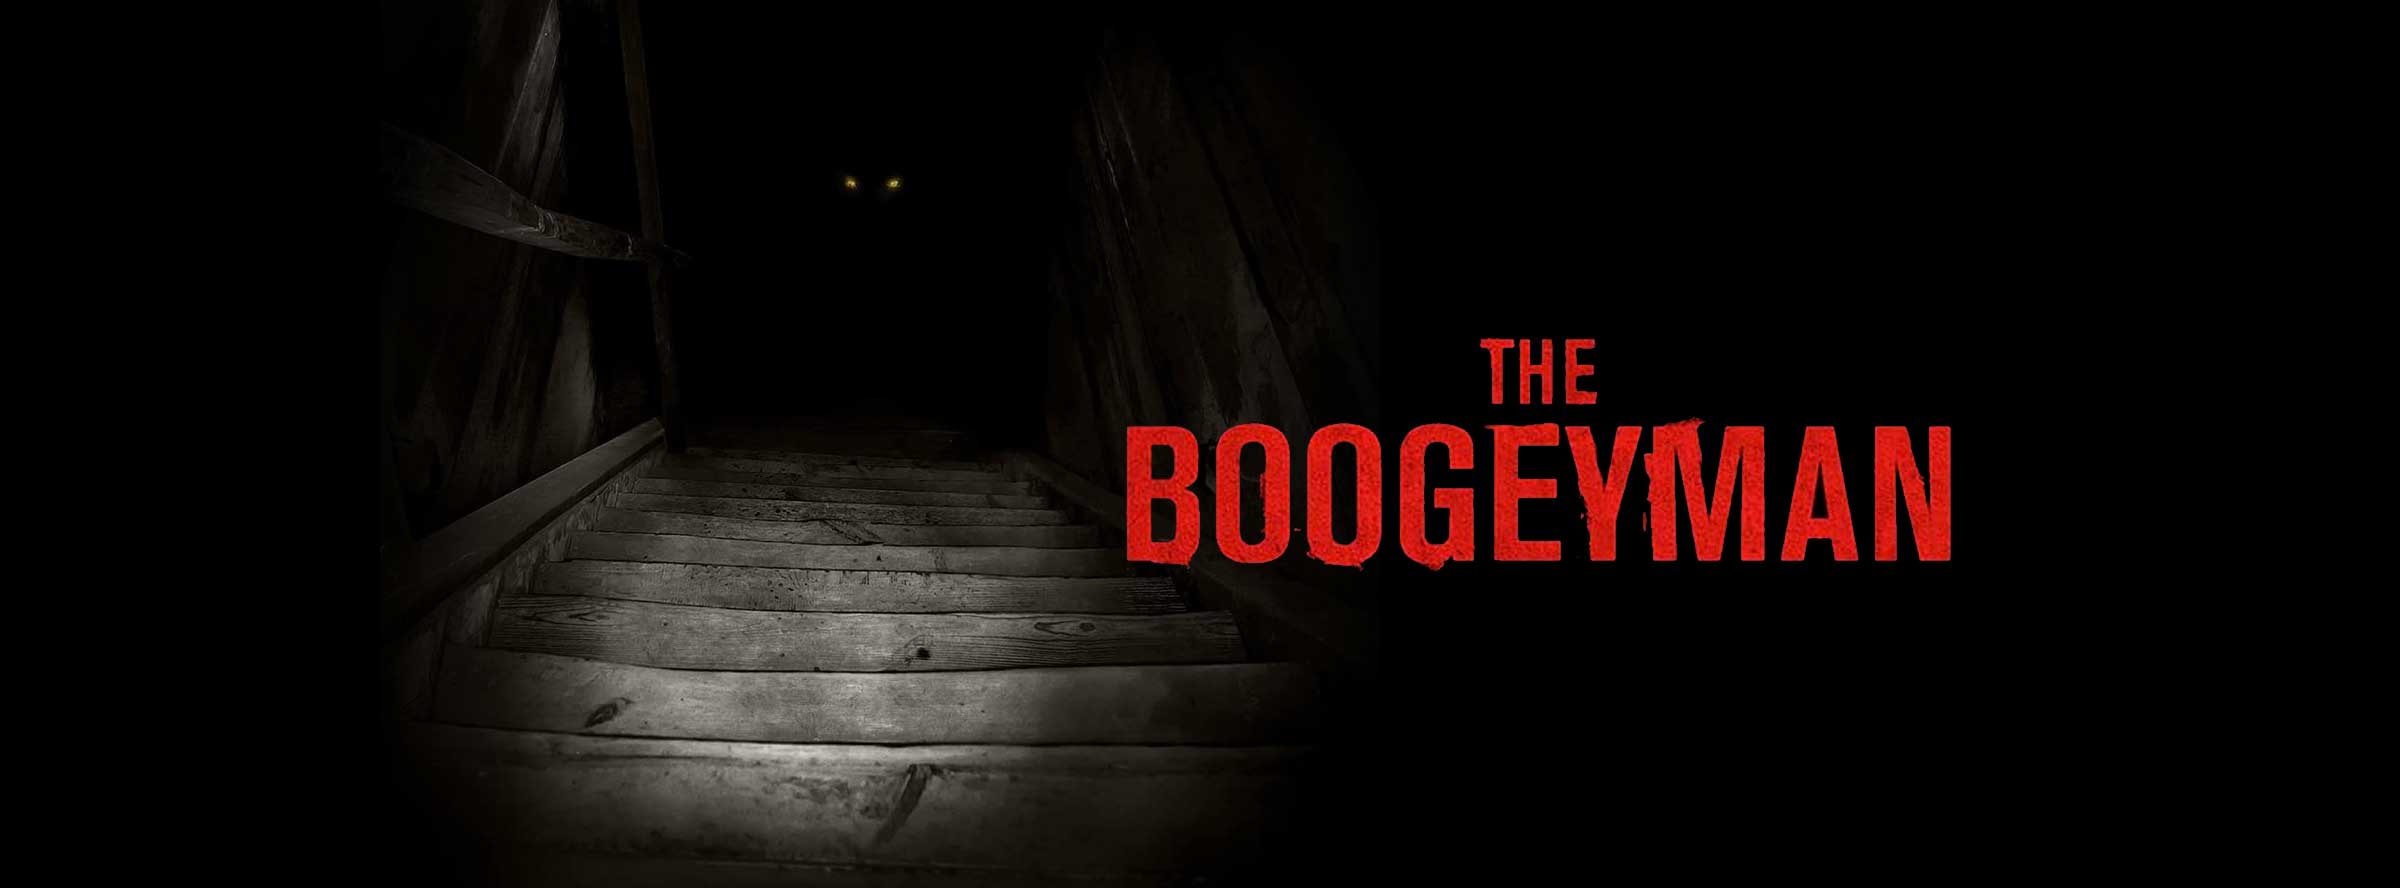 Slider Image for Boogeyman, The